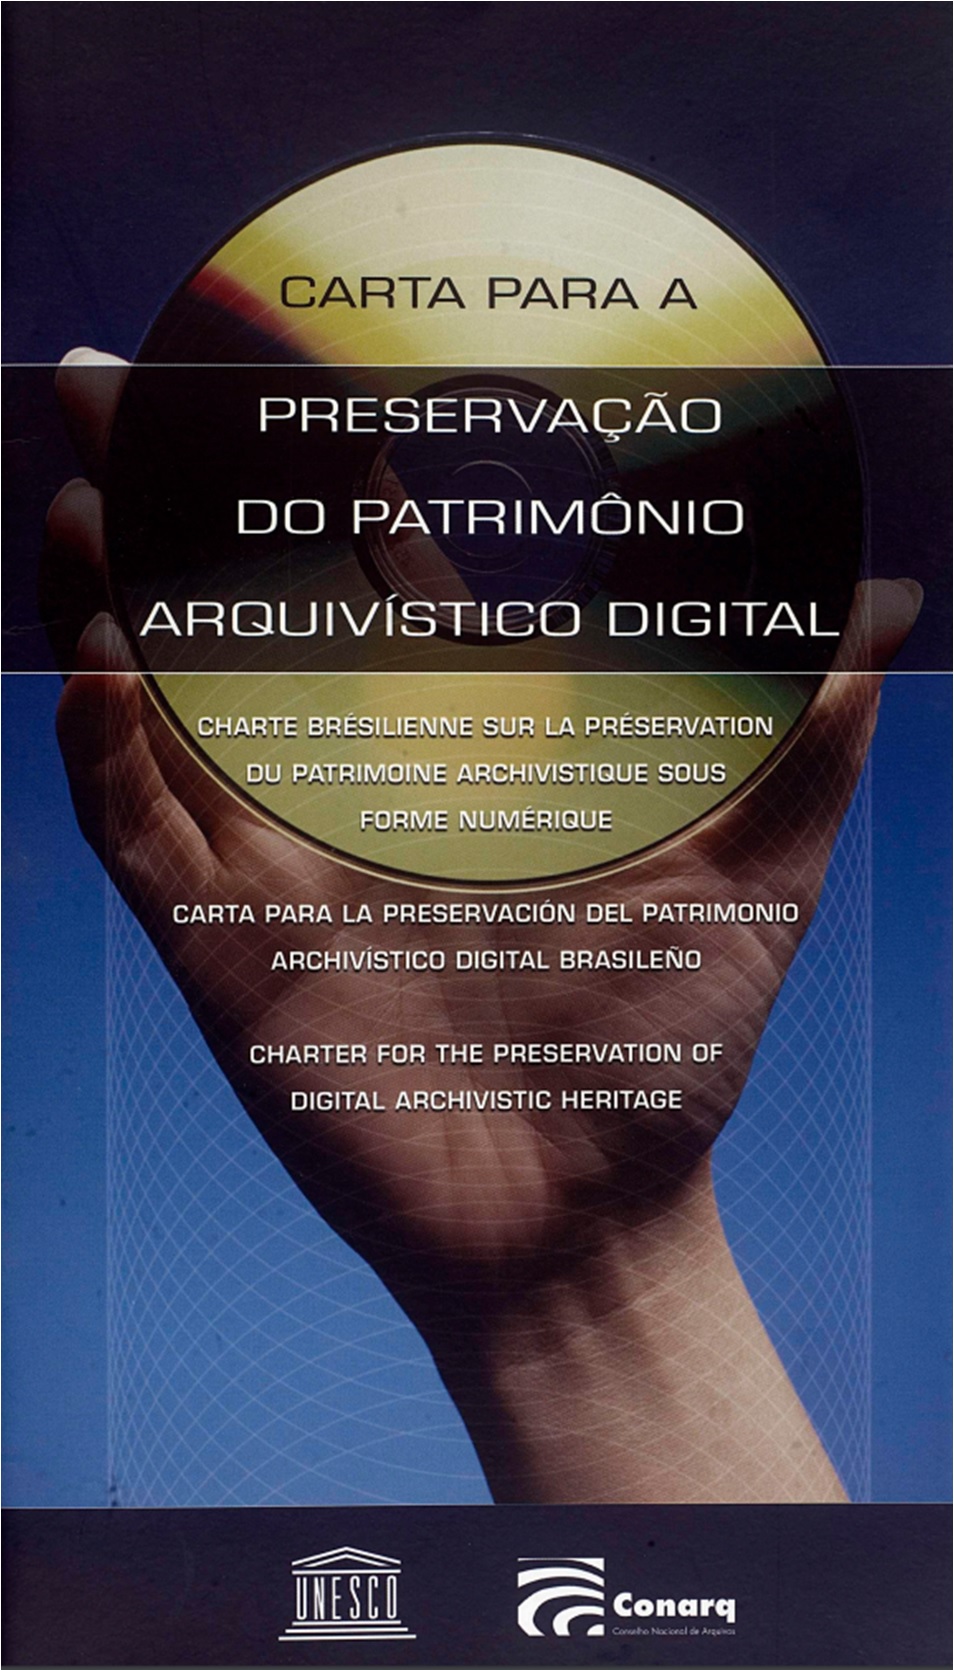 Conarq_Carta_preservao_patrimnio_digital.jpg